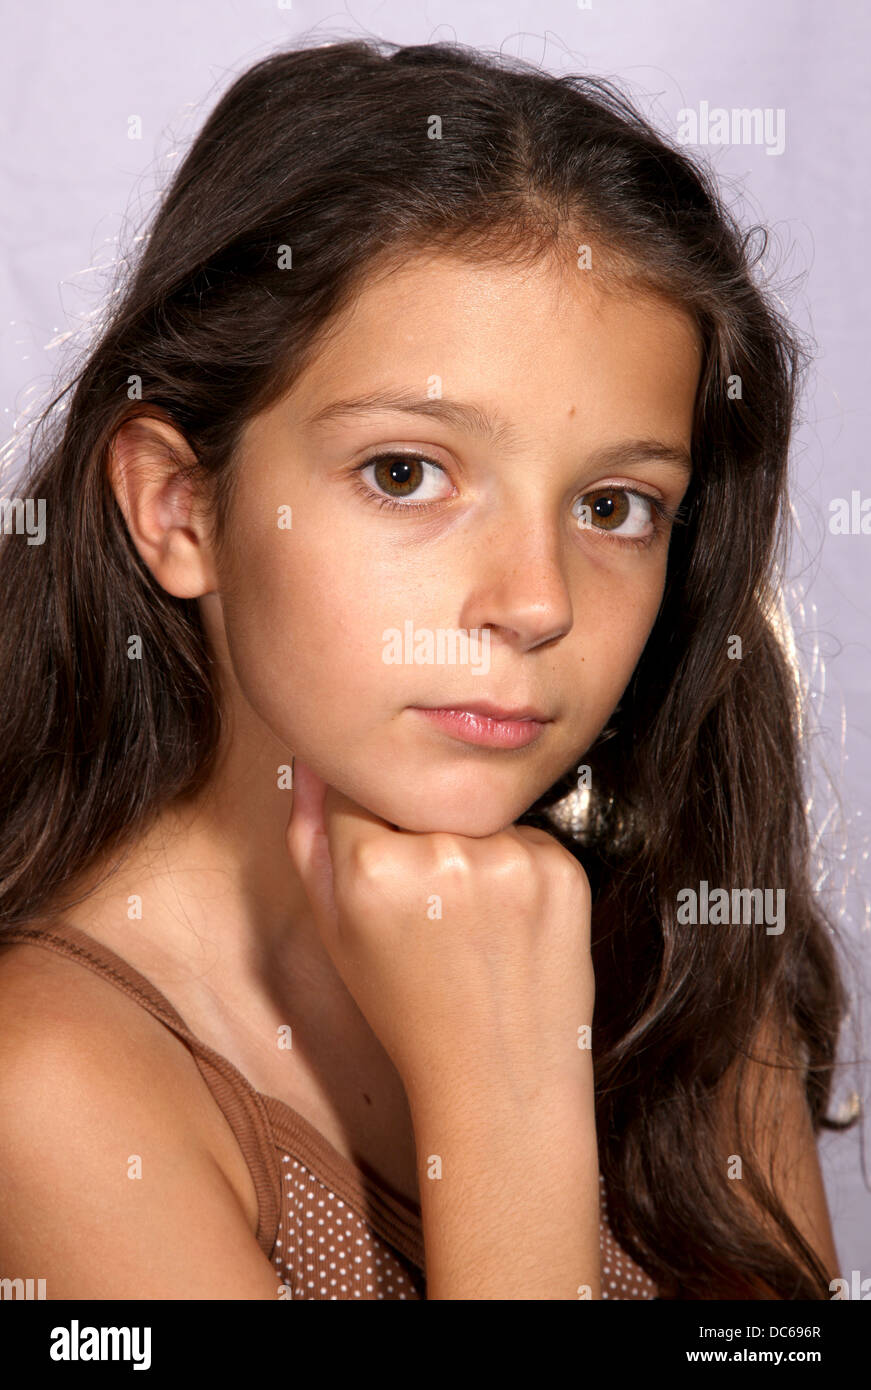 Portrait of young girl posing in studio lighting Stock Photo